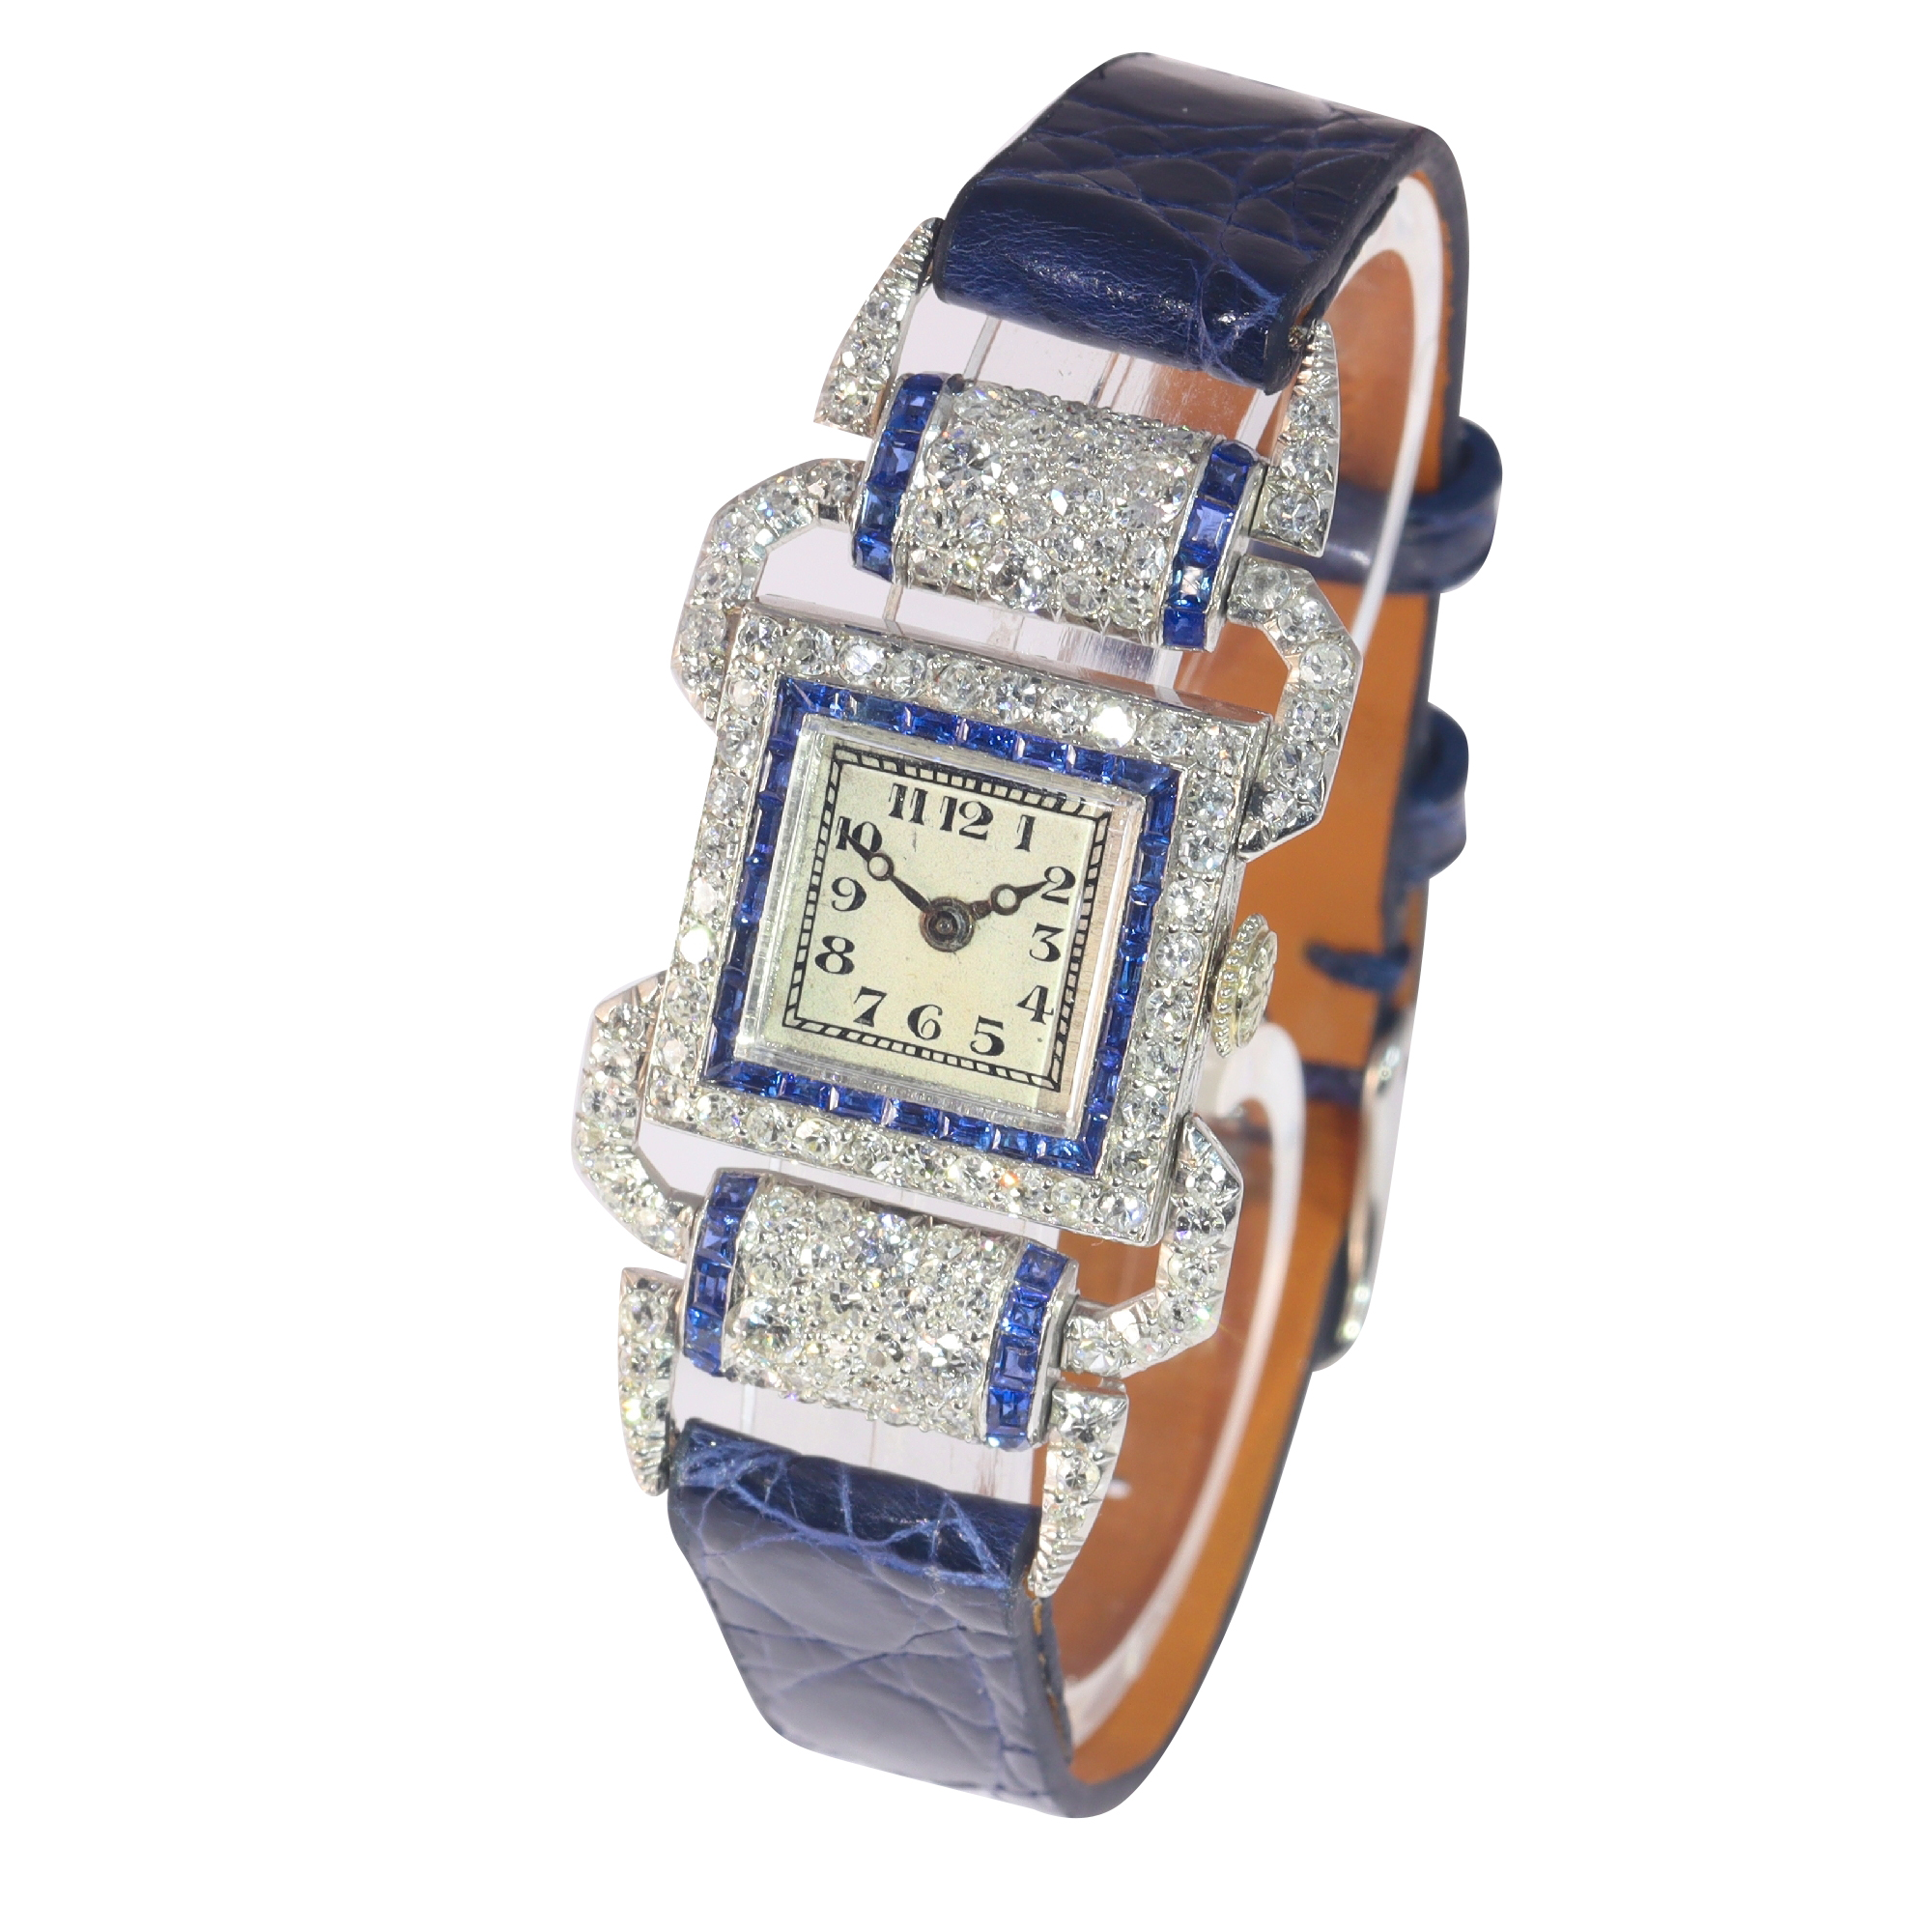 Timeless Sophistication: Art Deco Ladies Wrist Watch by Hatot